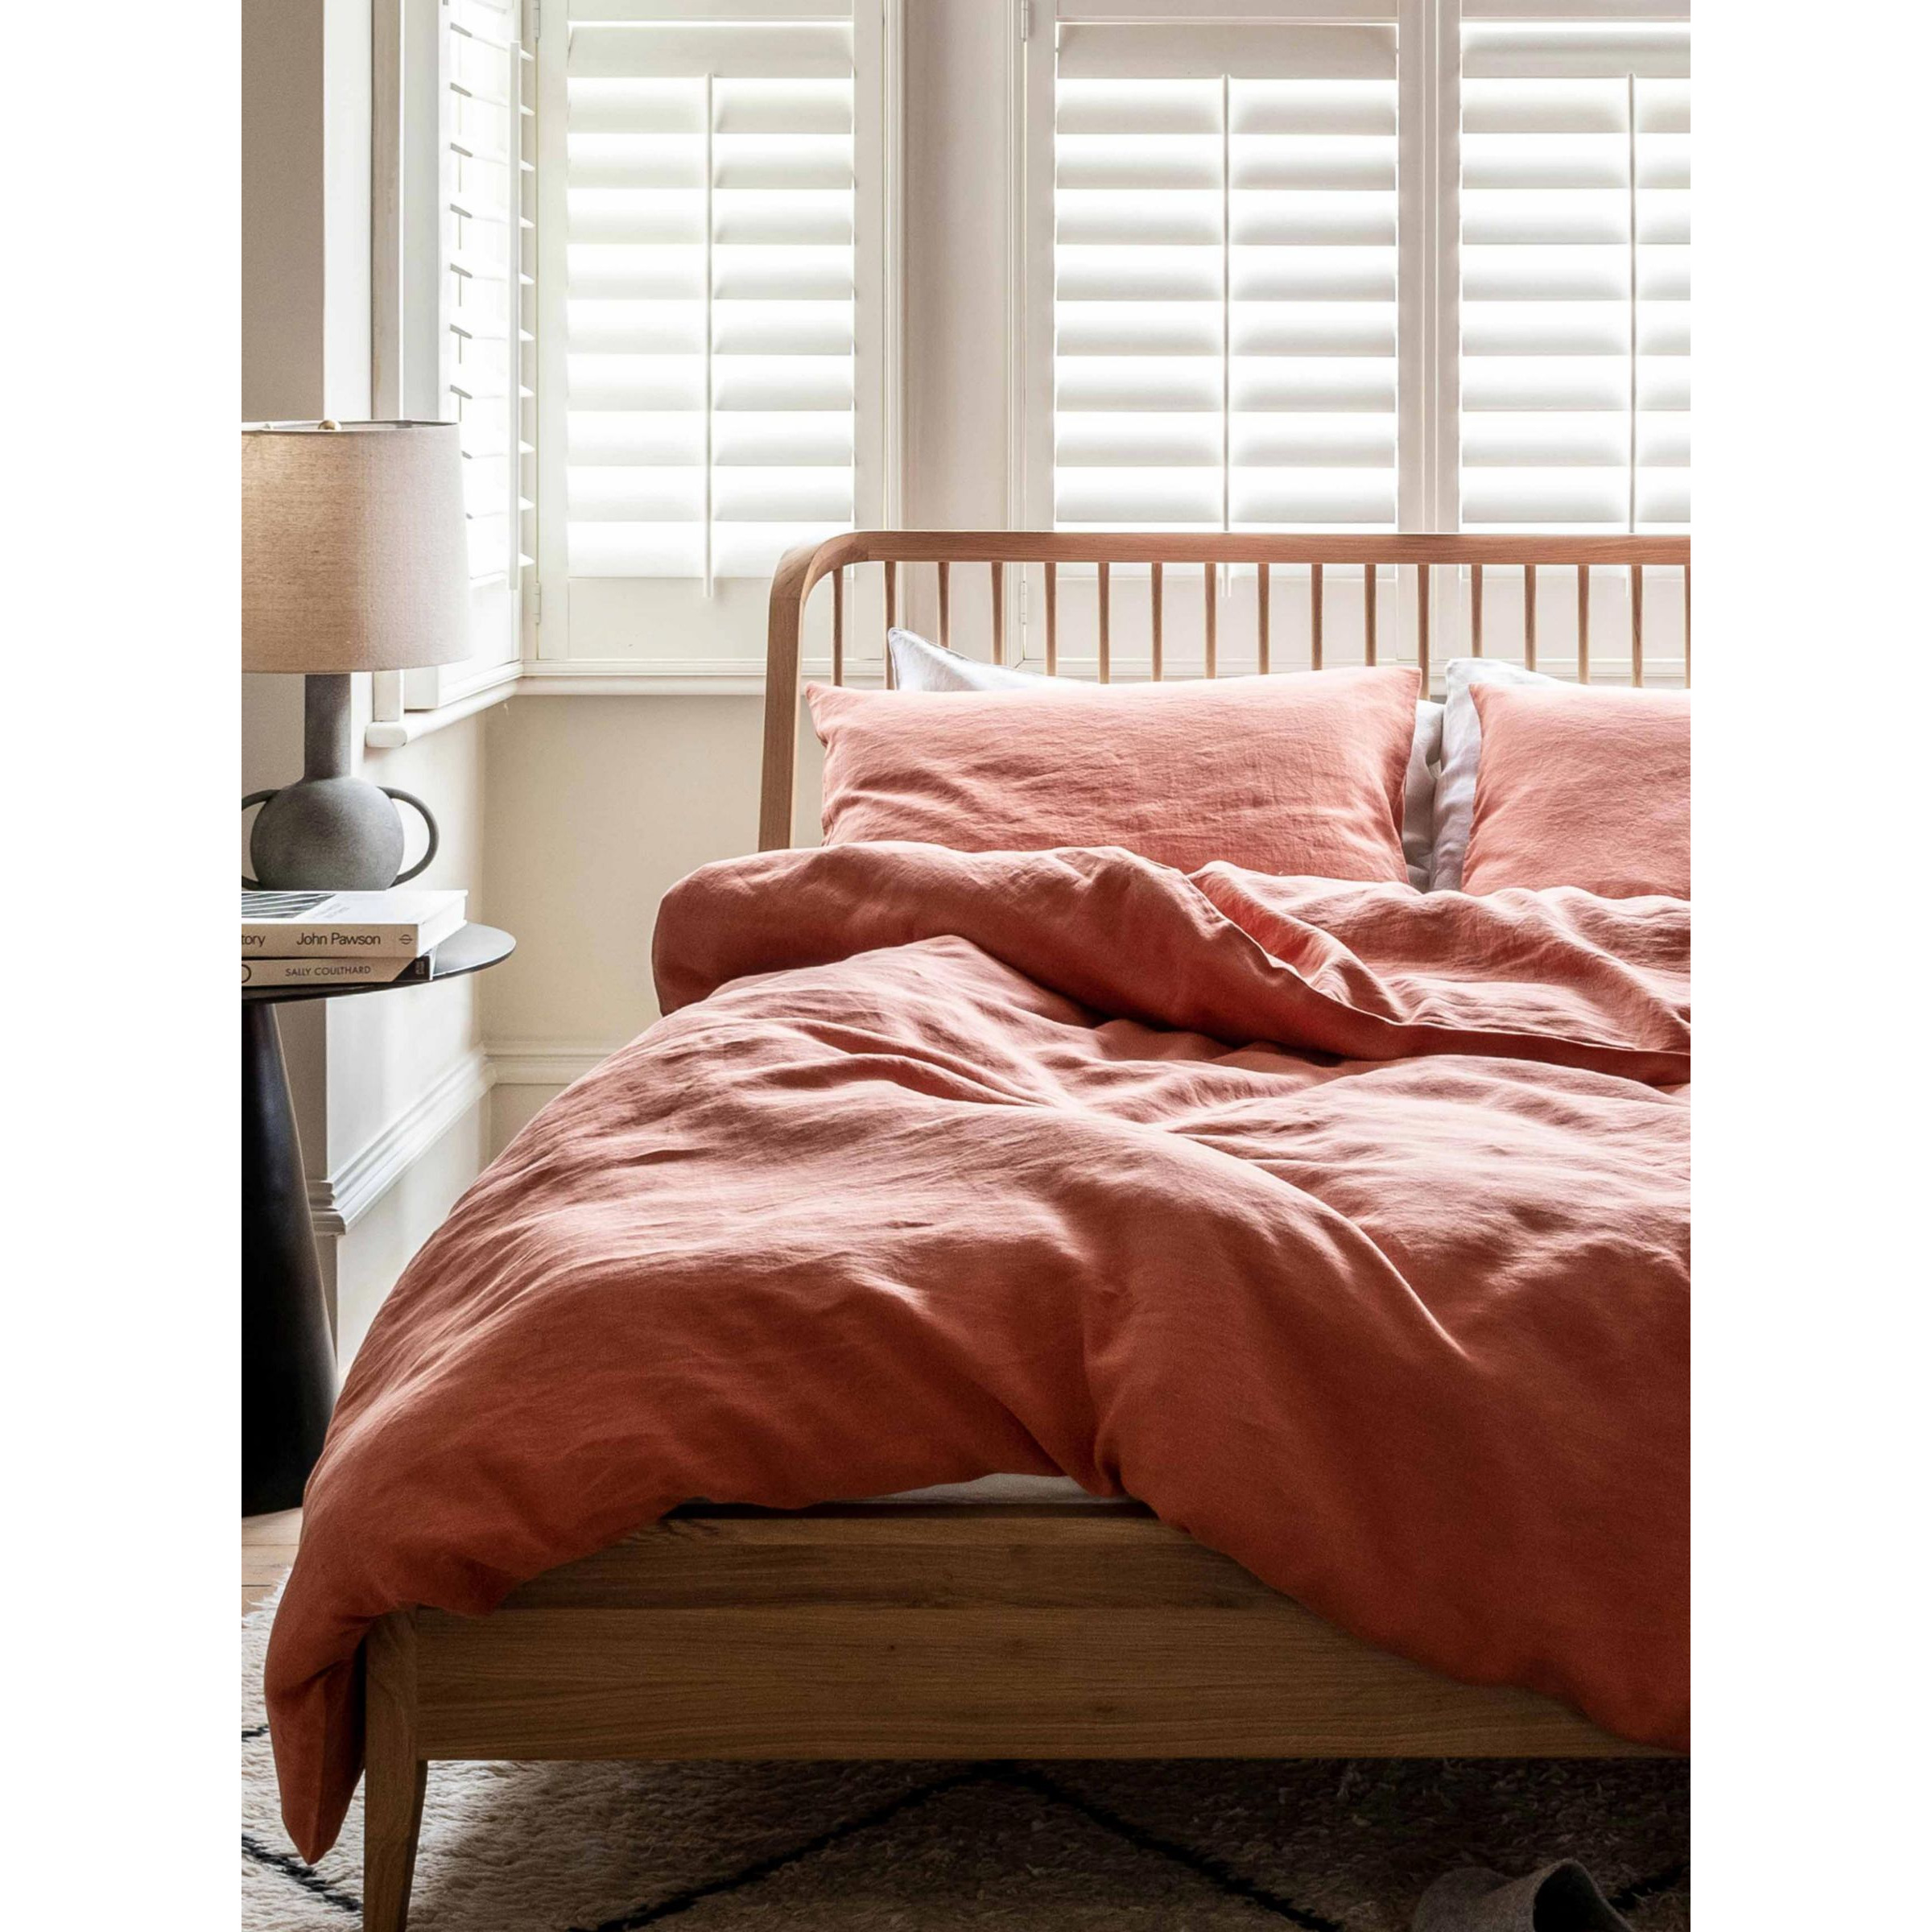 Piglet in Bed Linen Bedding - image 1